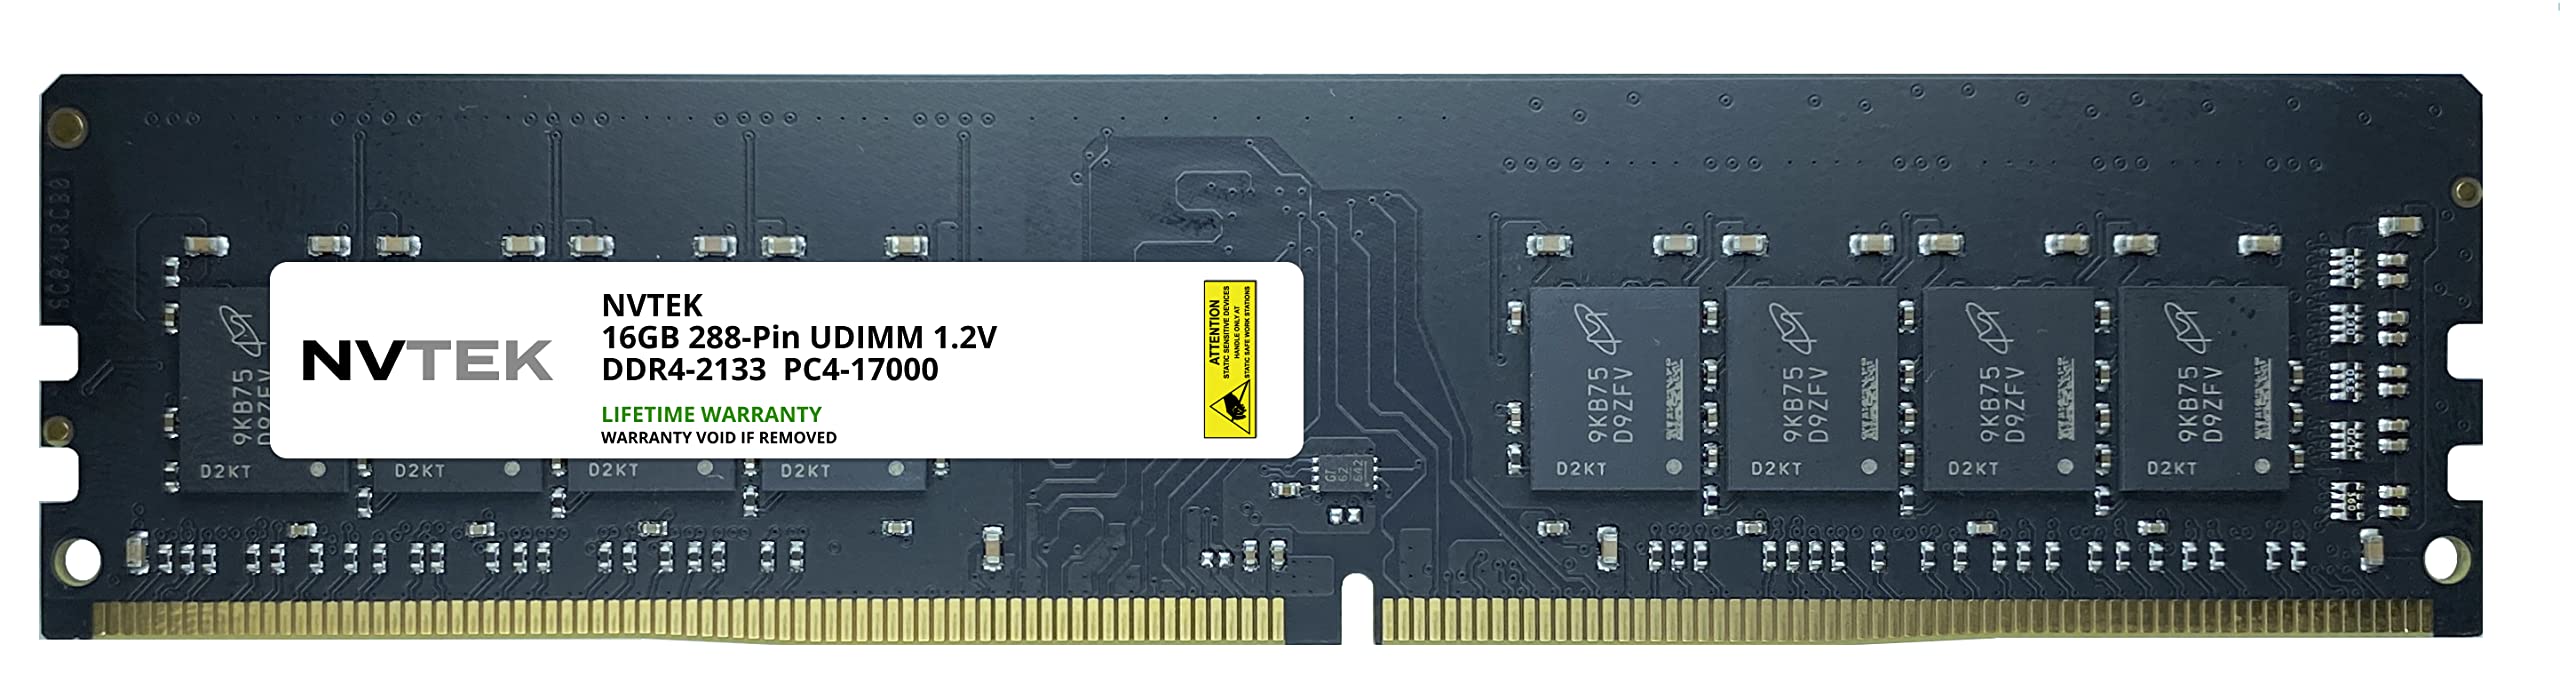 NVTEK 16GB DDR4 2133 PC4 17000 UDIMM デスクトップ RAM メモリ モジュール アップグレード CL15 Non-ECC バ